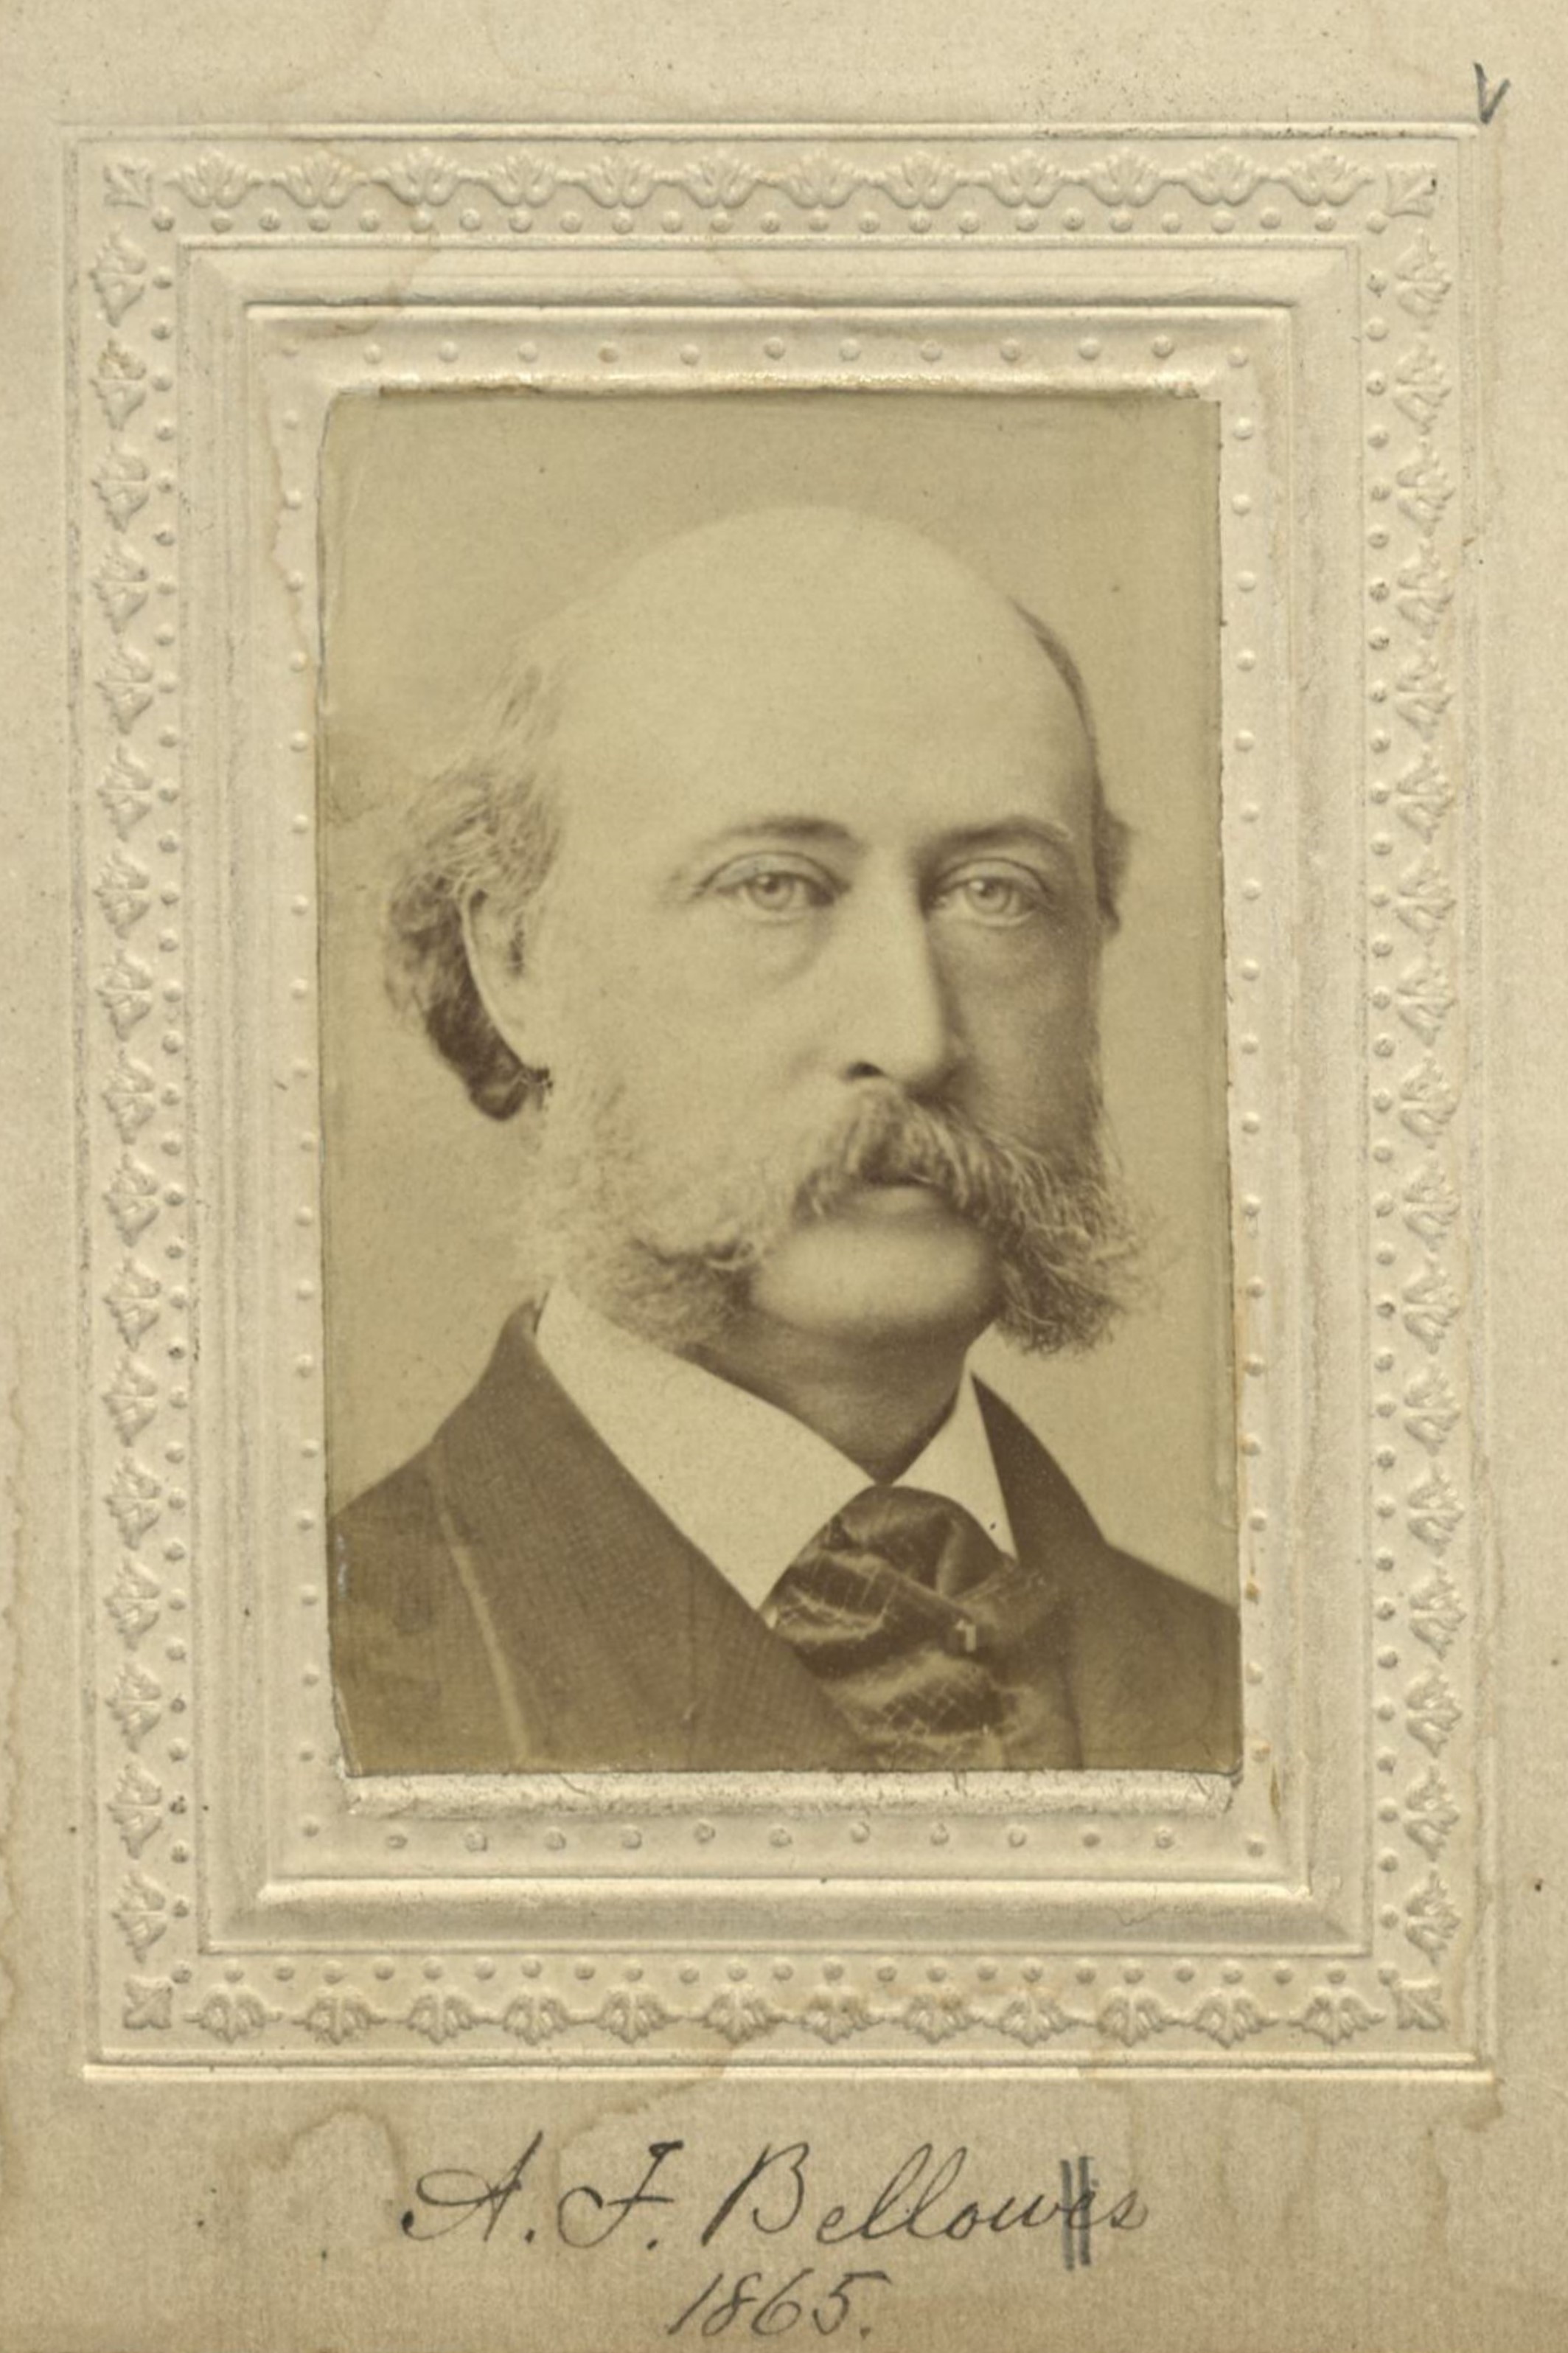 Member portrait of Albert F. Bellows